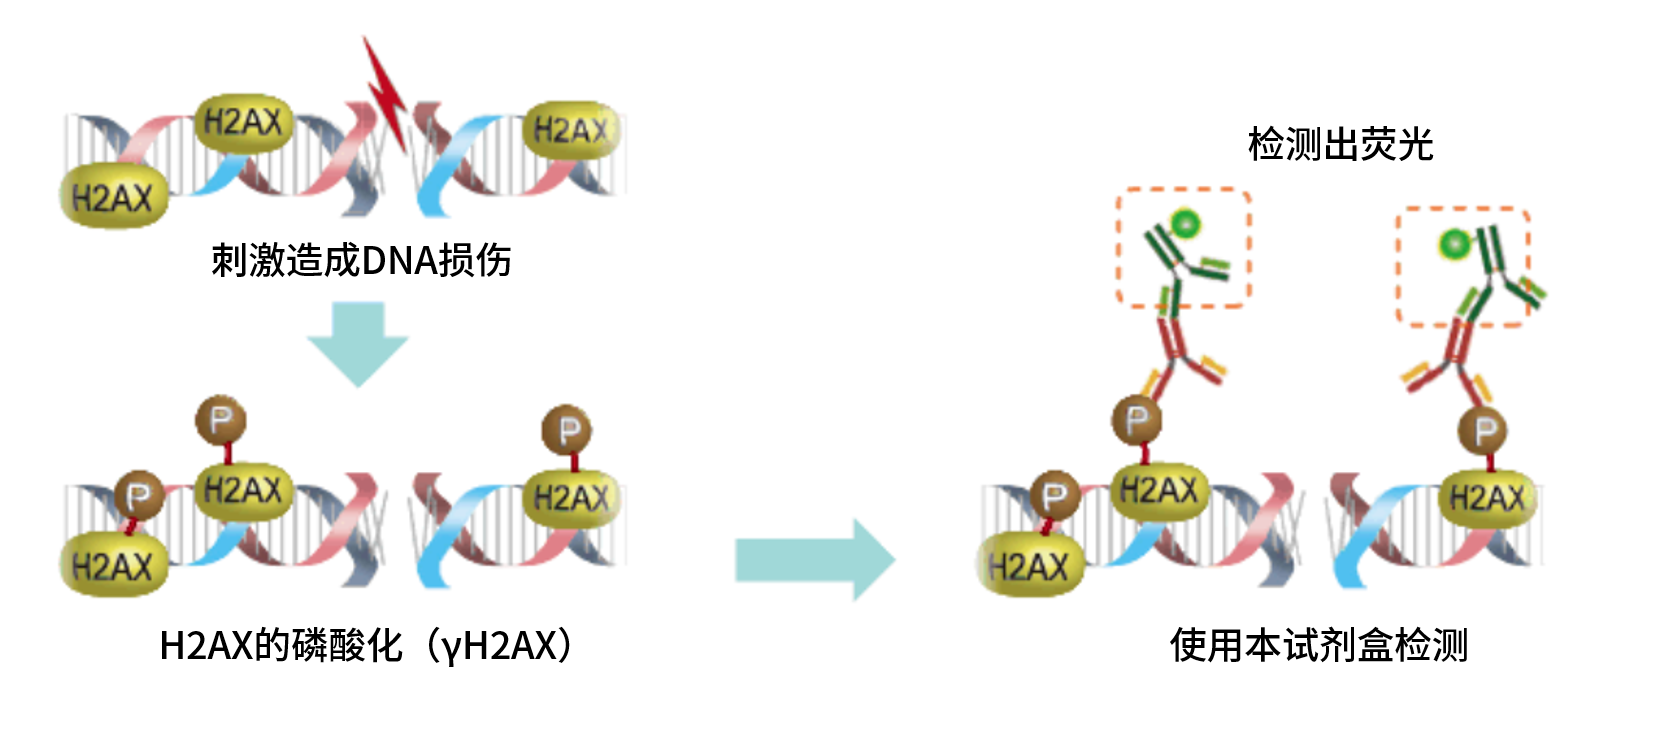 DNA Damage Detection Kit &#8211; γH2AX　- Green货号：G265